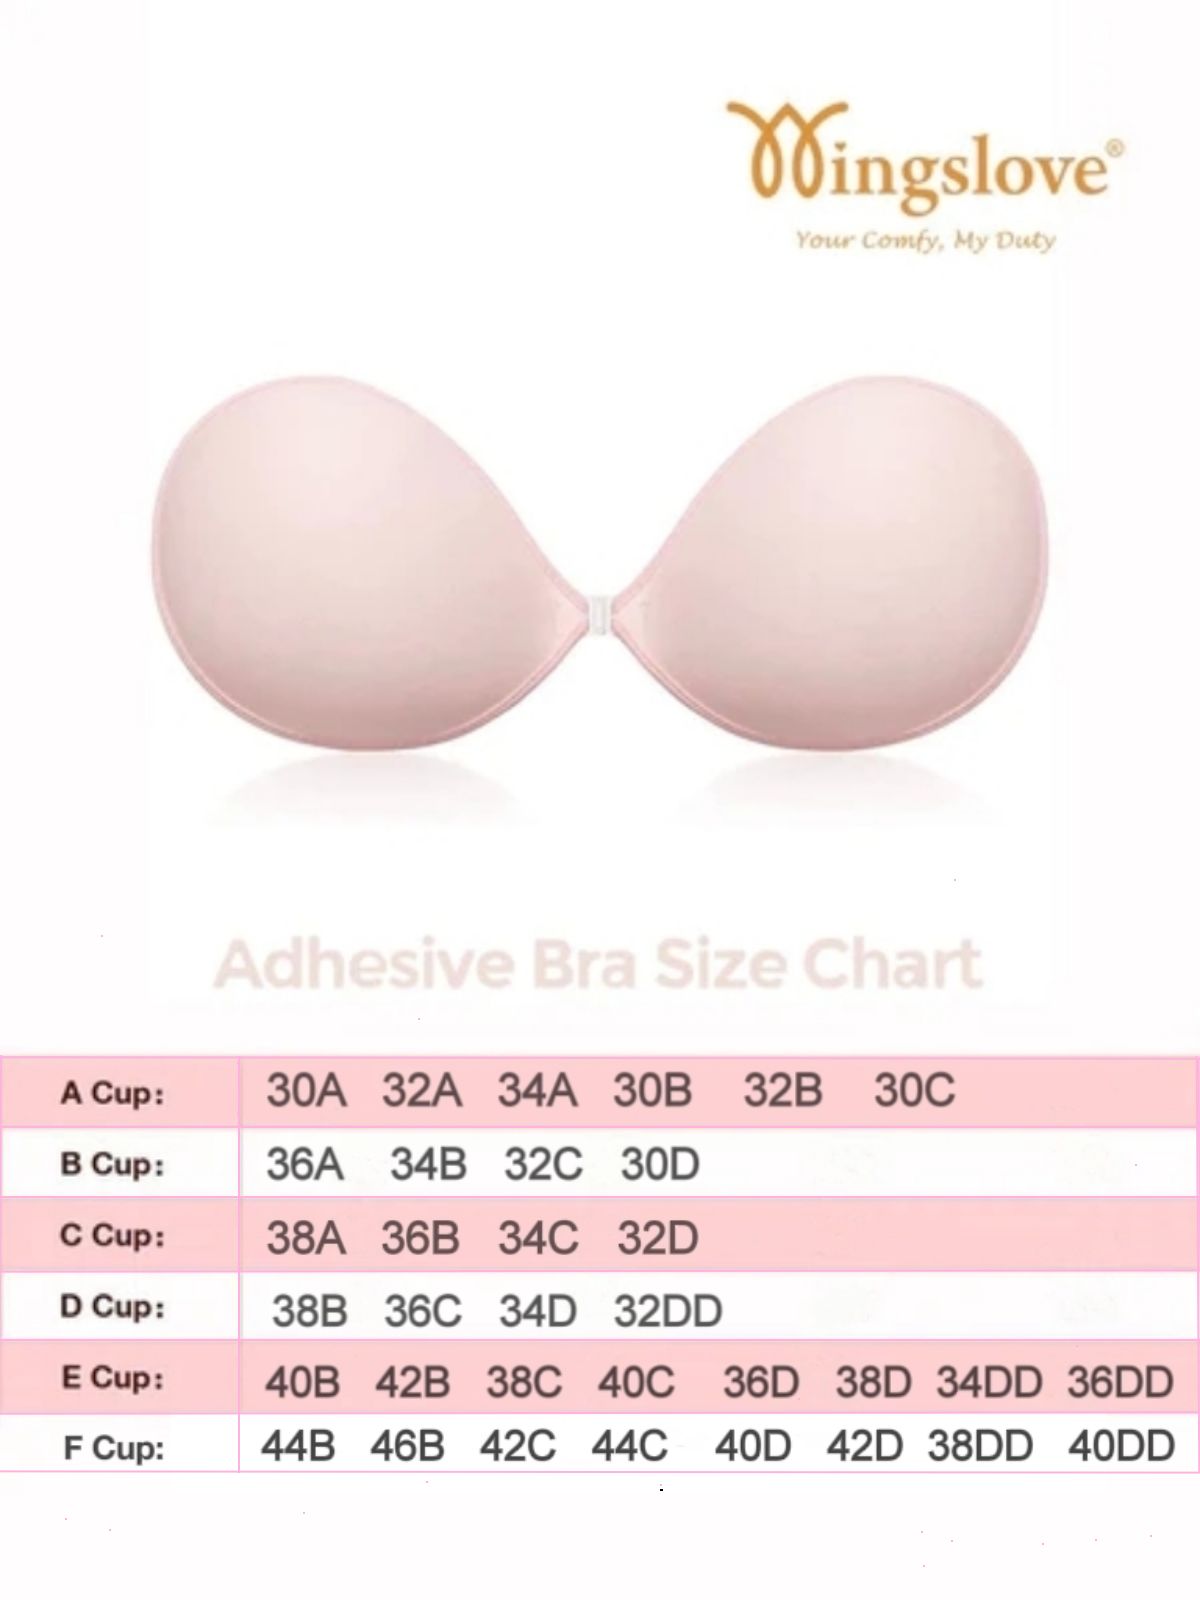 Adhesive Bra Size C